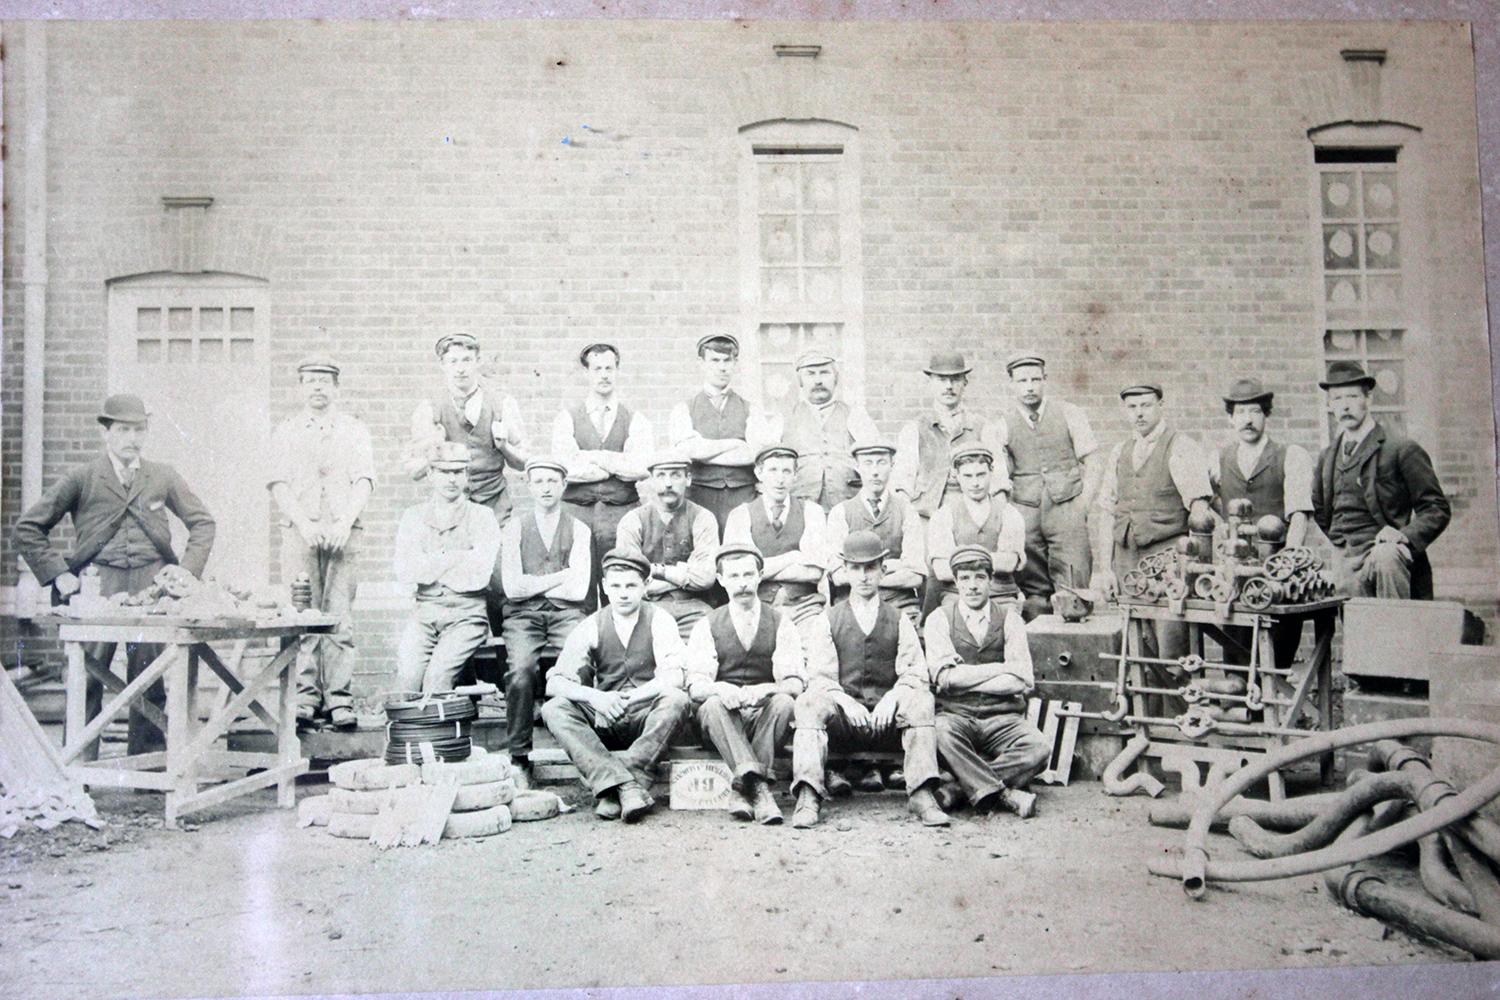 Late Victorian Rare Albumen Print Photograph of Staff of West Sussex Lunatic Asylum, circa 1900